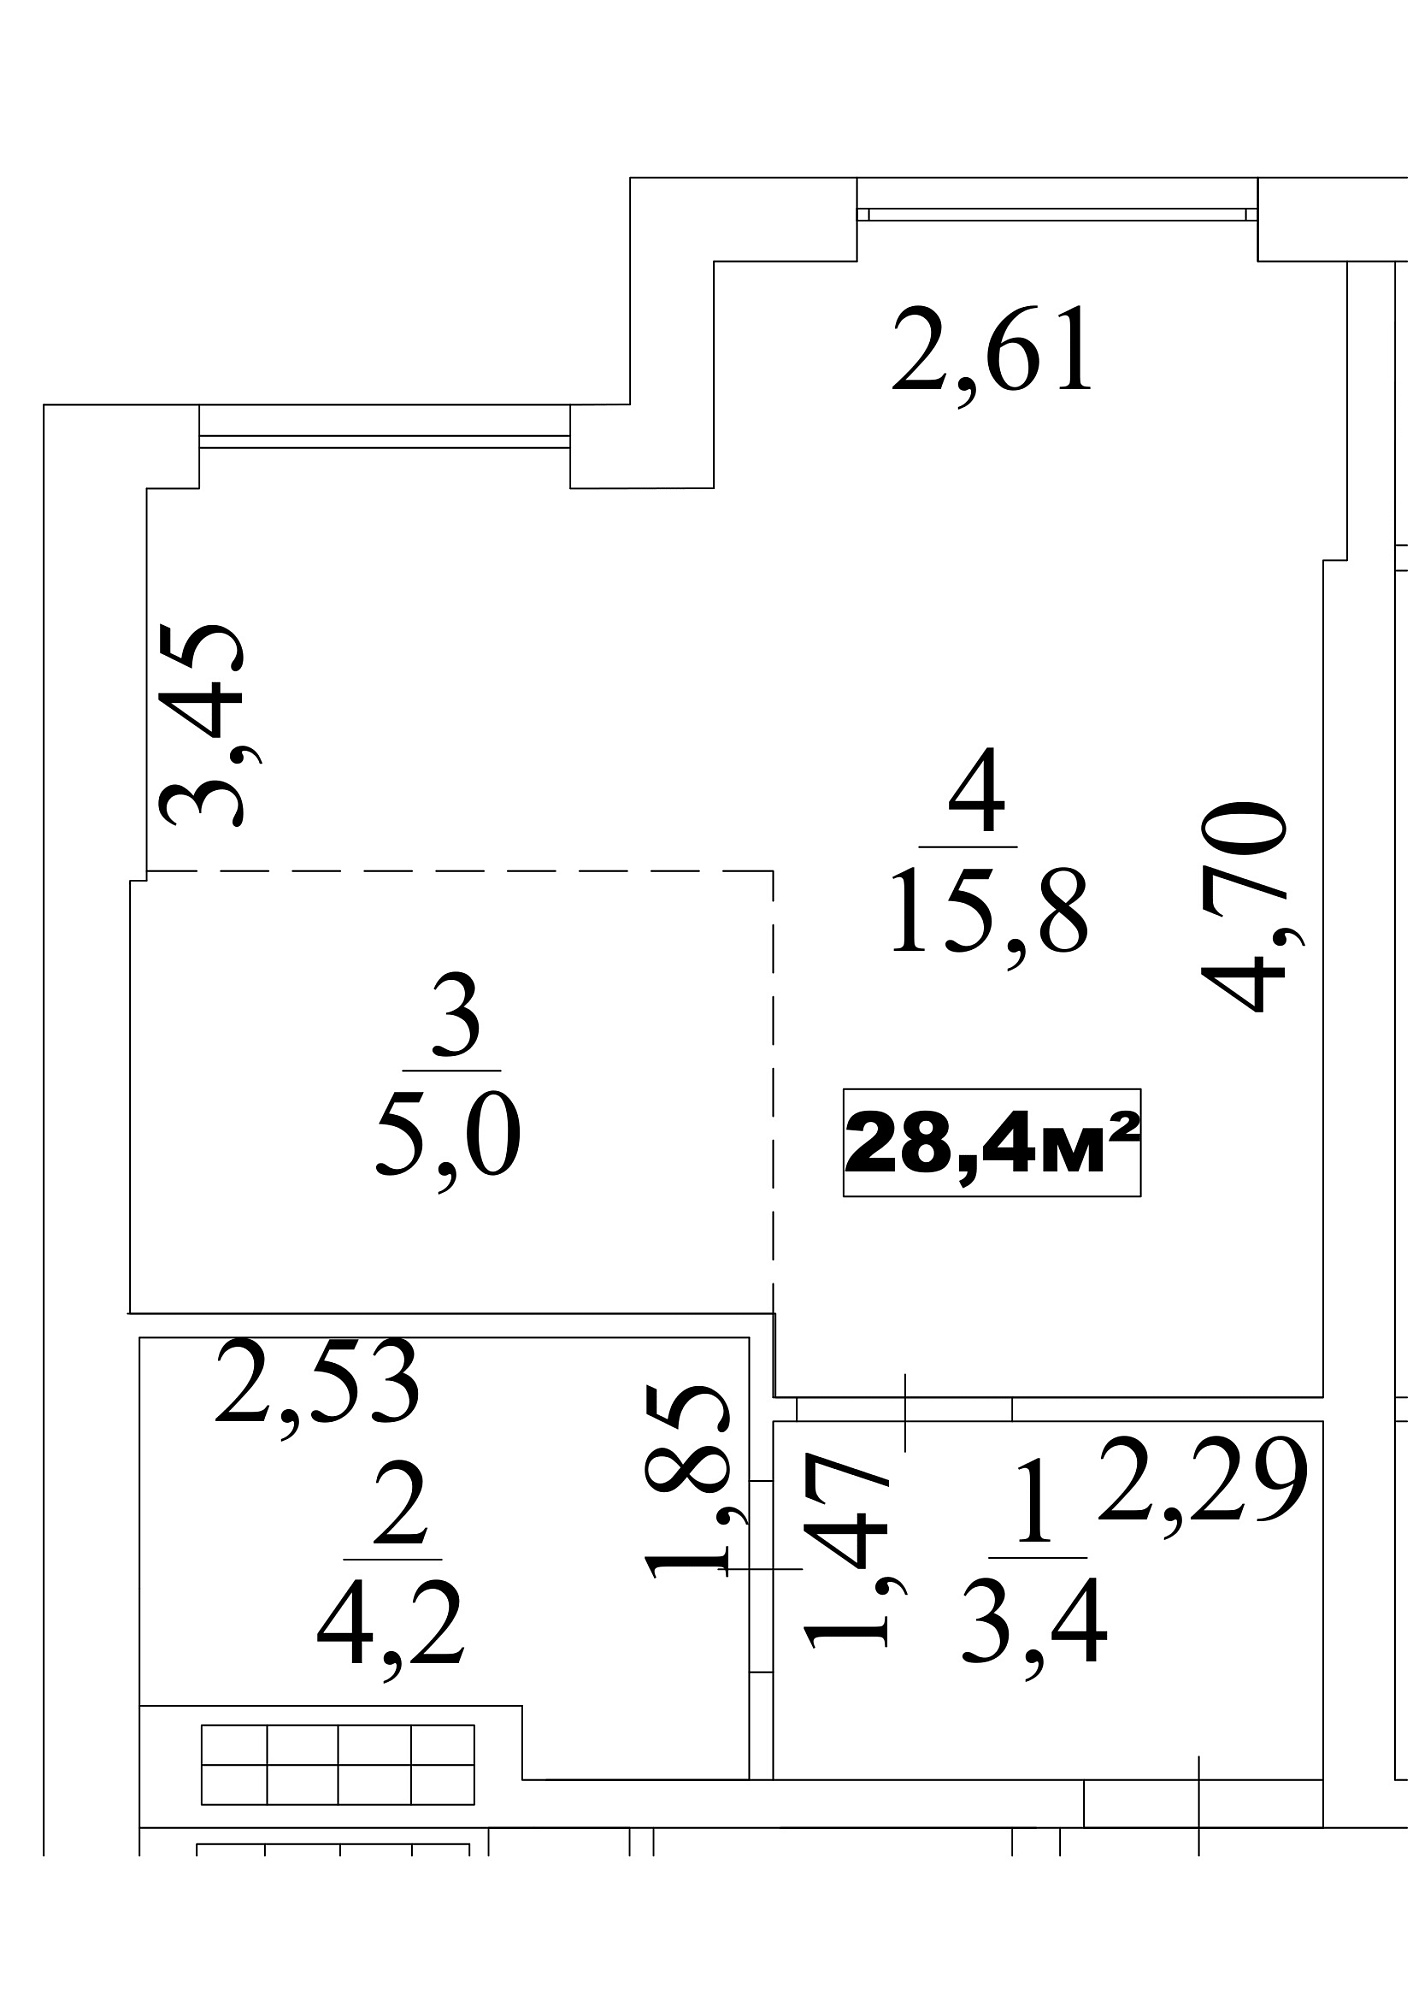 Planning Smart flats area 28.4m2, AB-10-05/0039б.